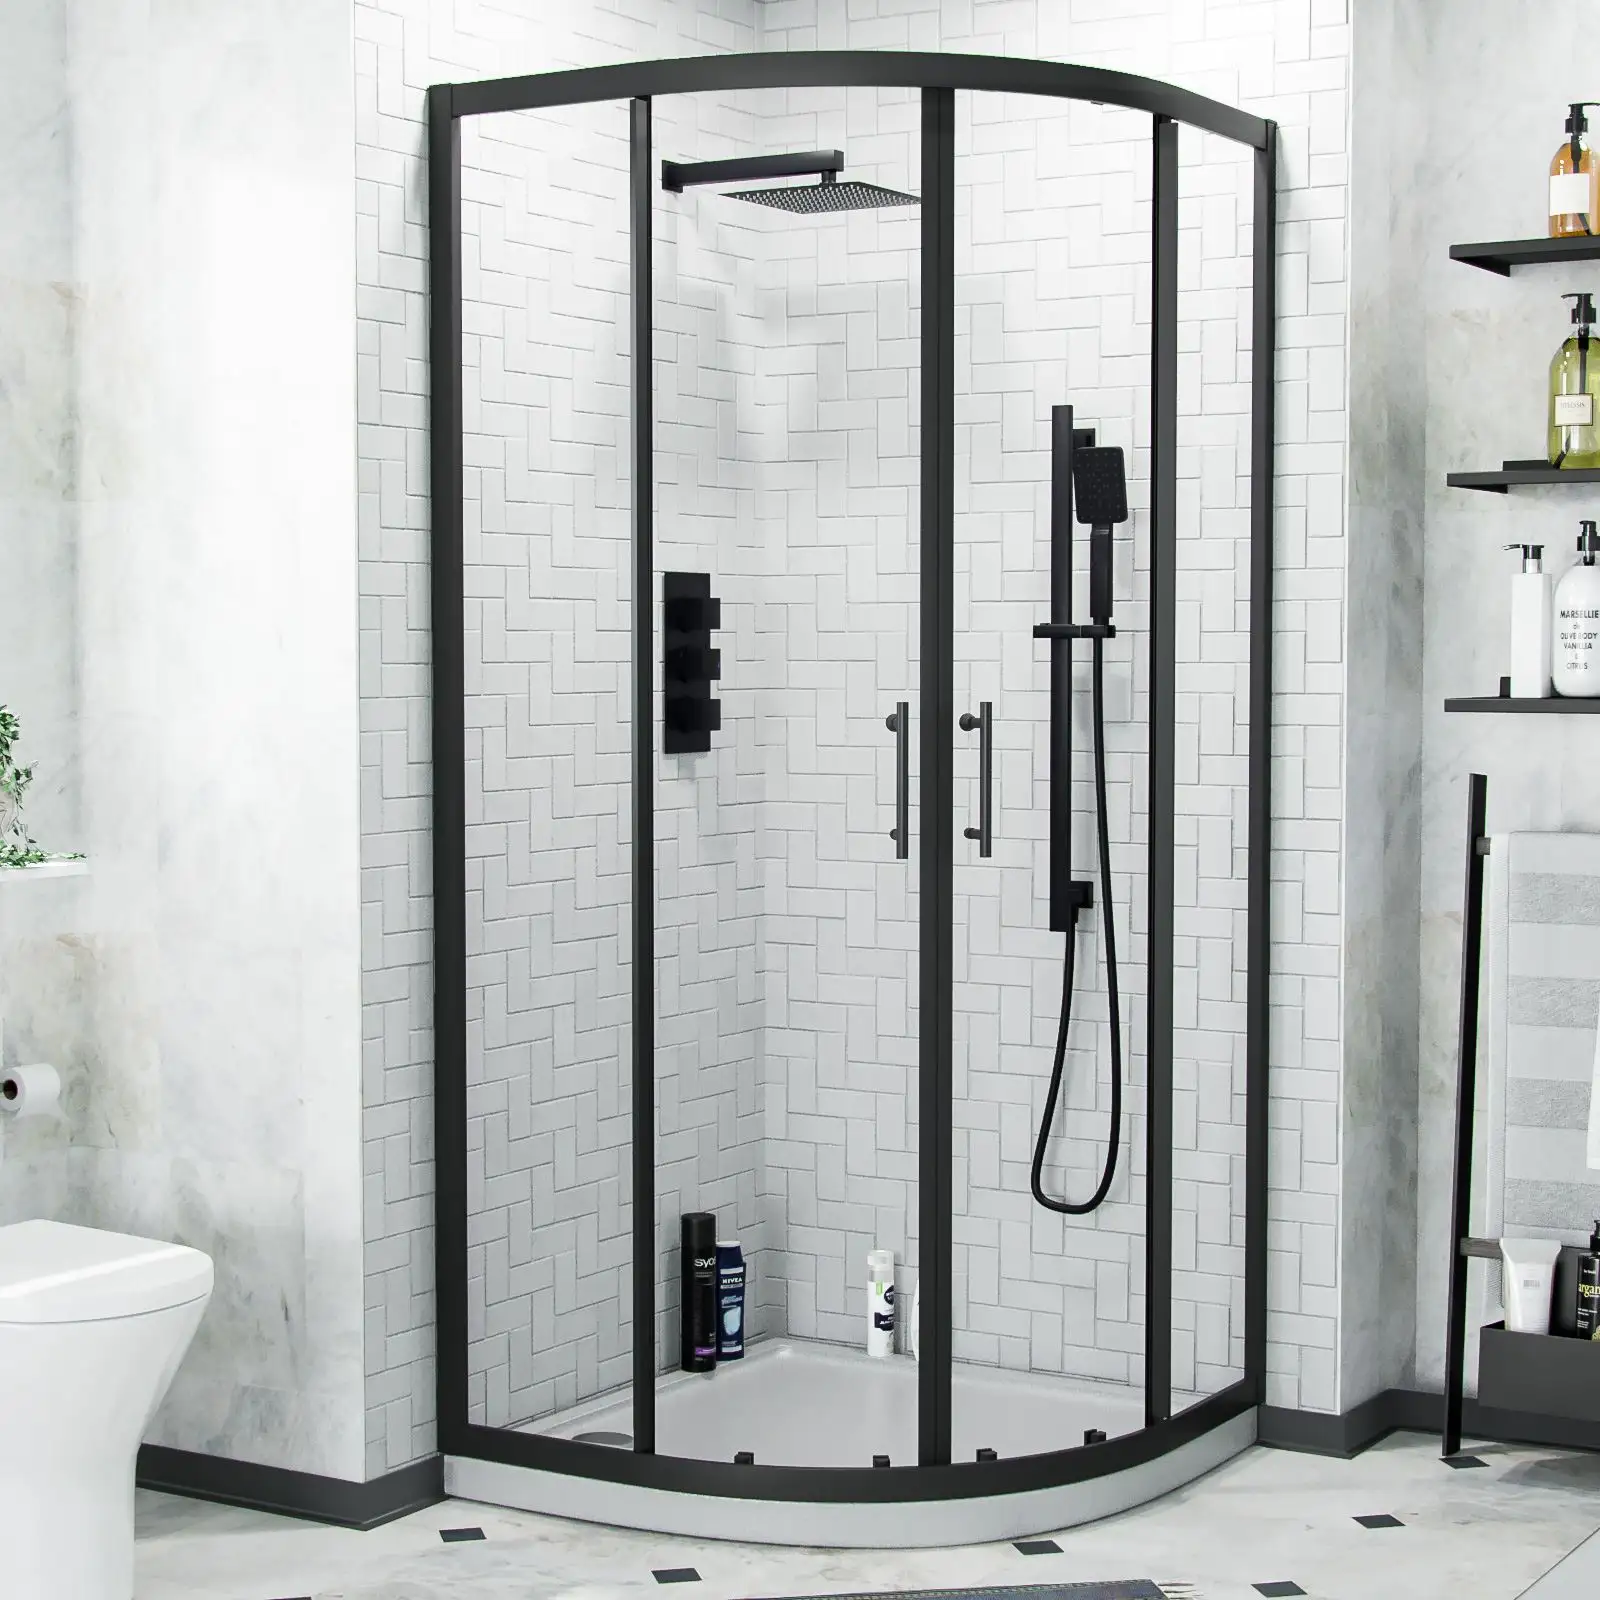 Black Aluminum Frame Quadrant Sliding Glass Shower Cubicle Enclosure Arc Bathroom Tempered Glass Shower Room Cabin